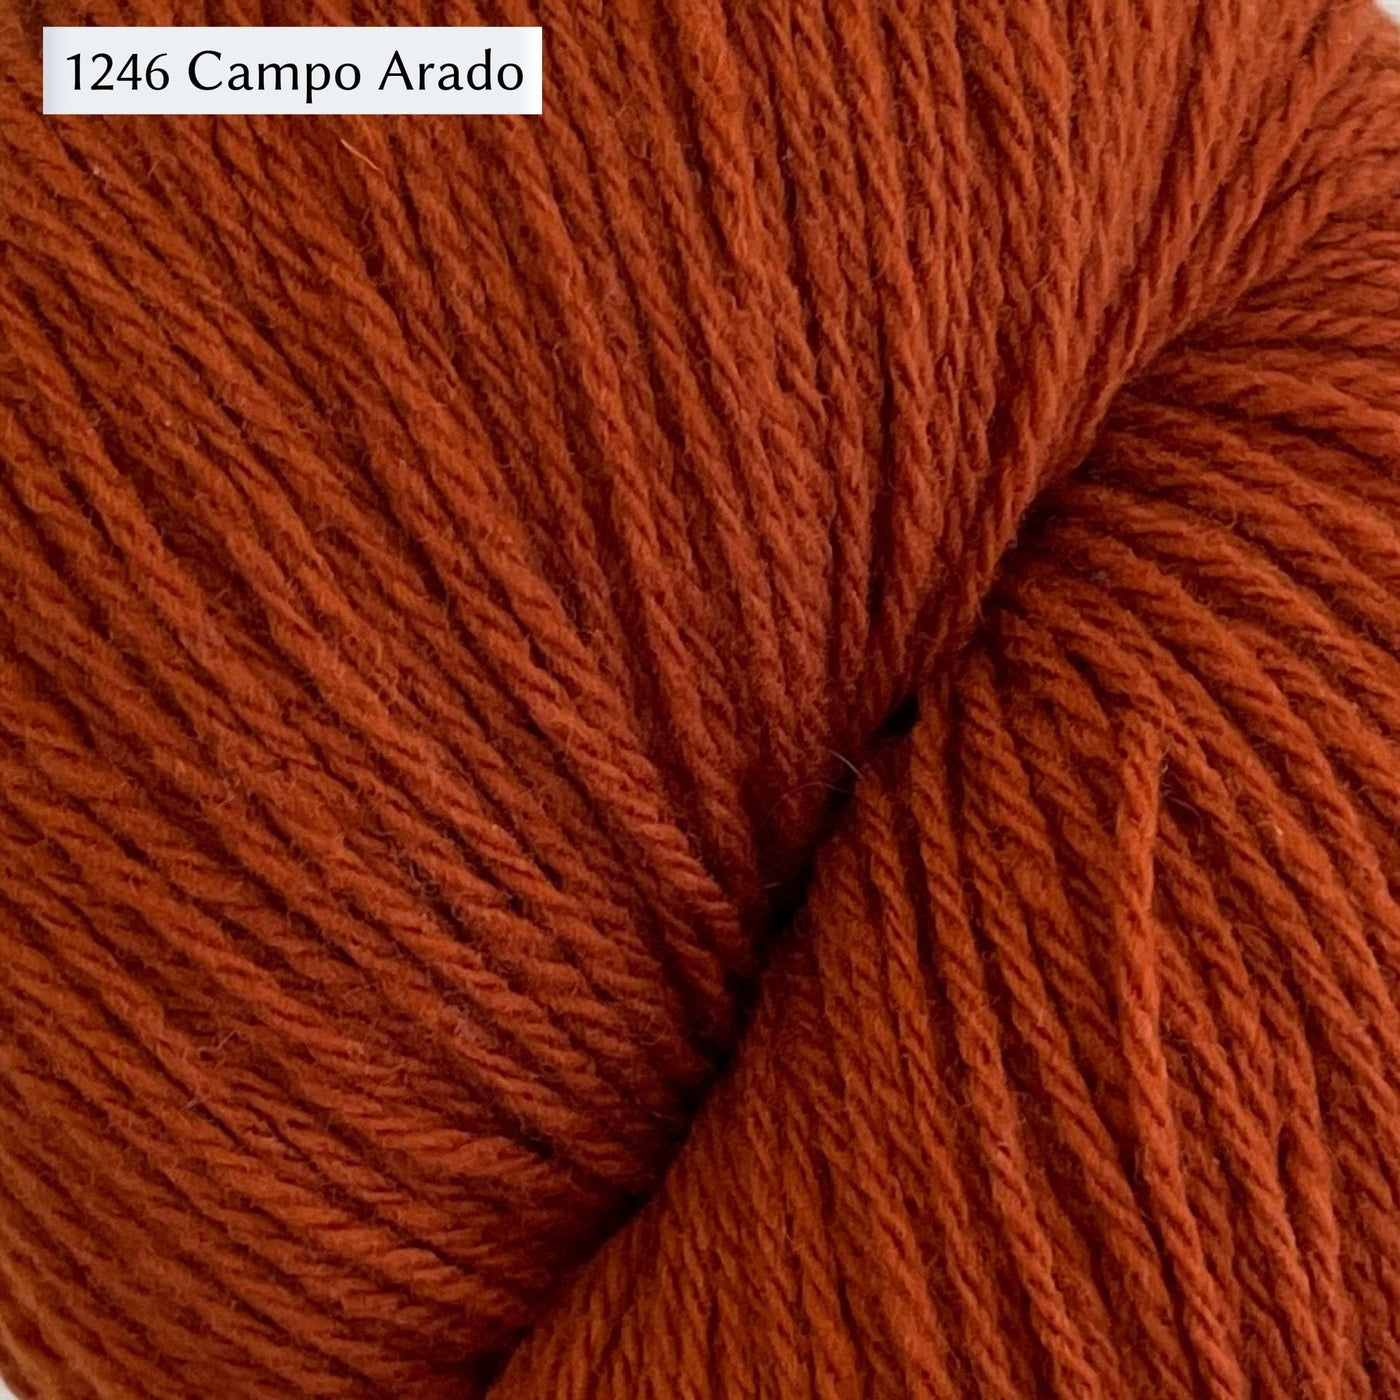 WoolDreamers Dehesa de Barrera, a fingering weight yarn, in 1246 Campo Arado, a russet red